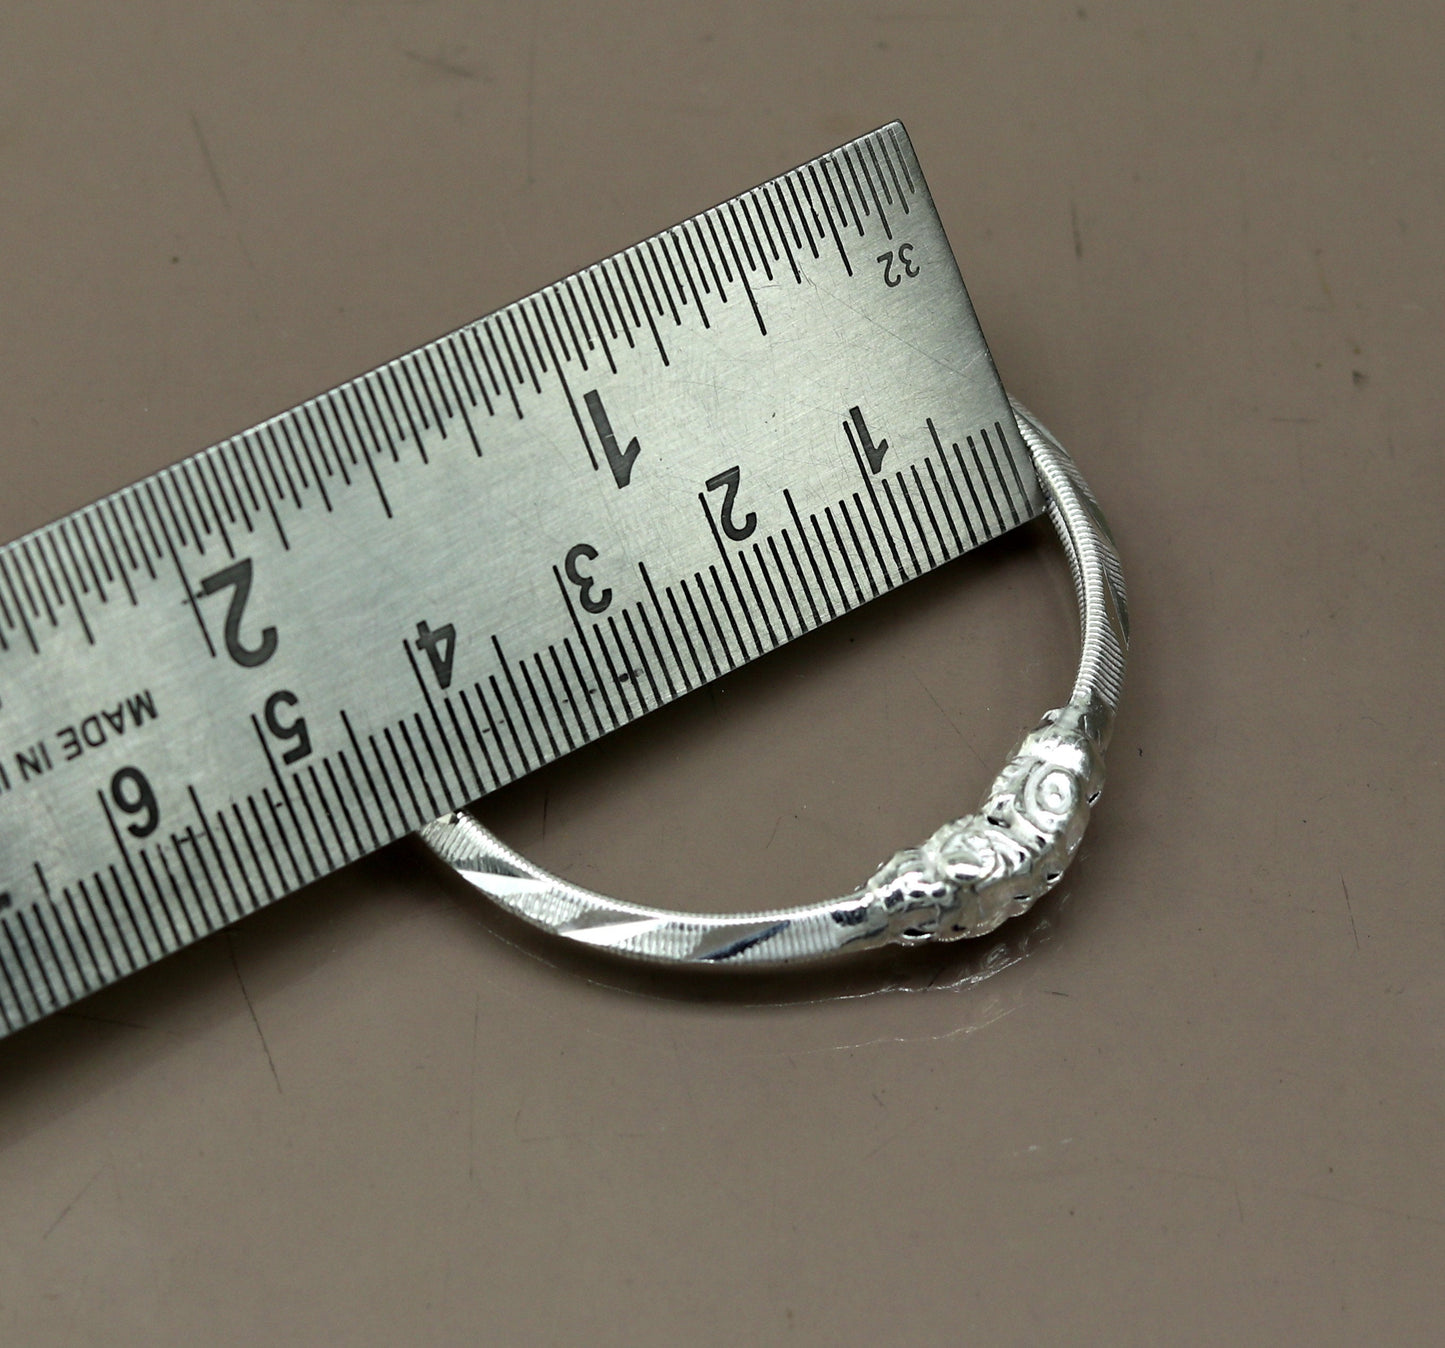 3.5mm Solid sterling silver gorgeous baby bangle bracelet kada, faublous customized bangle kada bracelet for kids gifting nbbk104 - TRIBAL ORNAMENTS